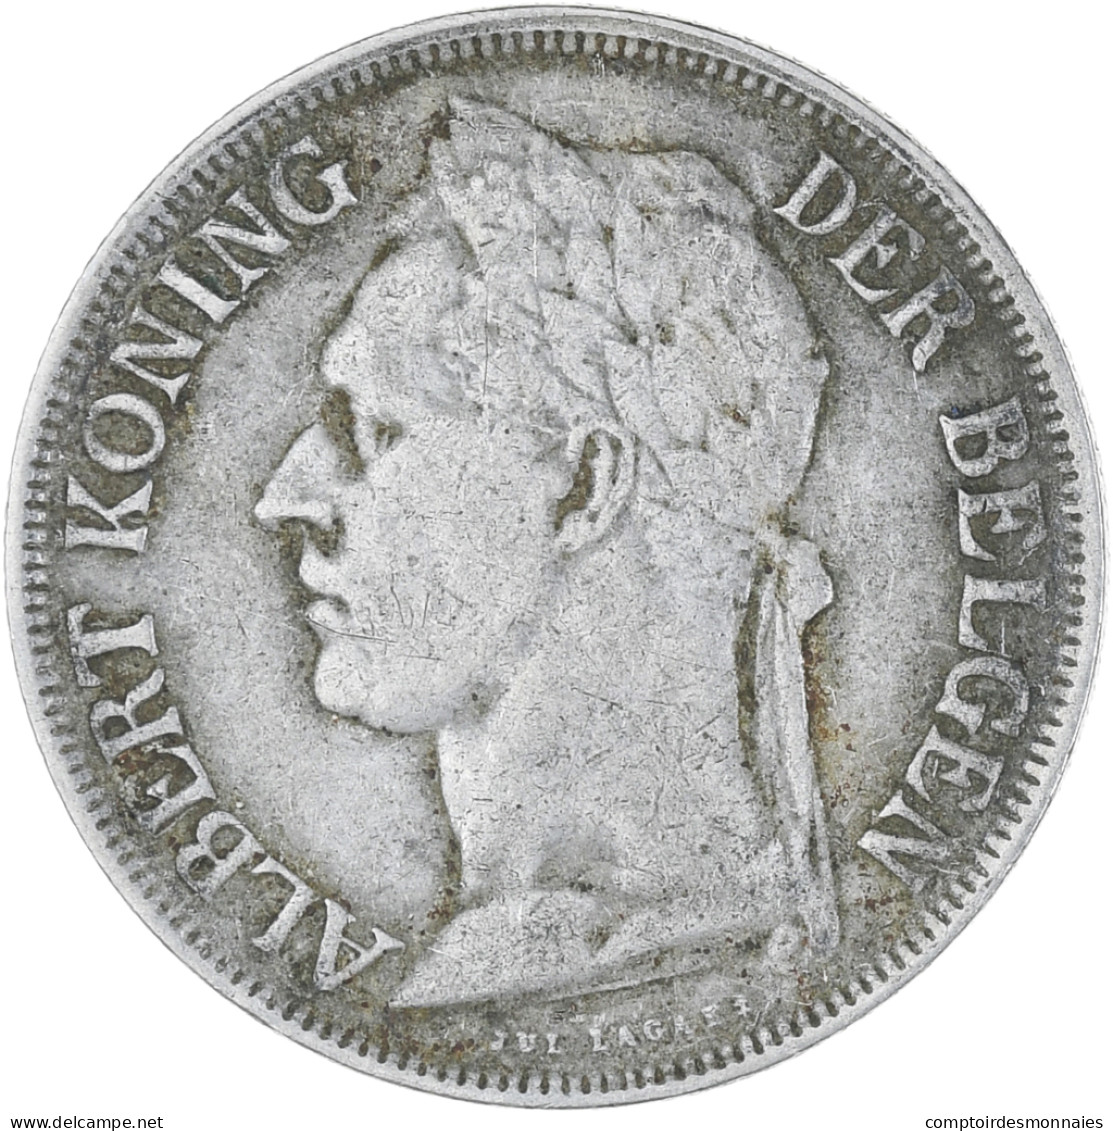 Monnaie, Congo Belge, Franc, 1924, TTB, Cupro-nickel, KM:21 - 1910-1934: Albert I